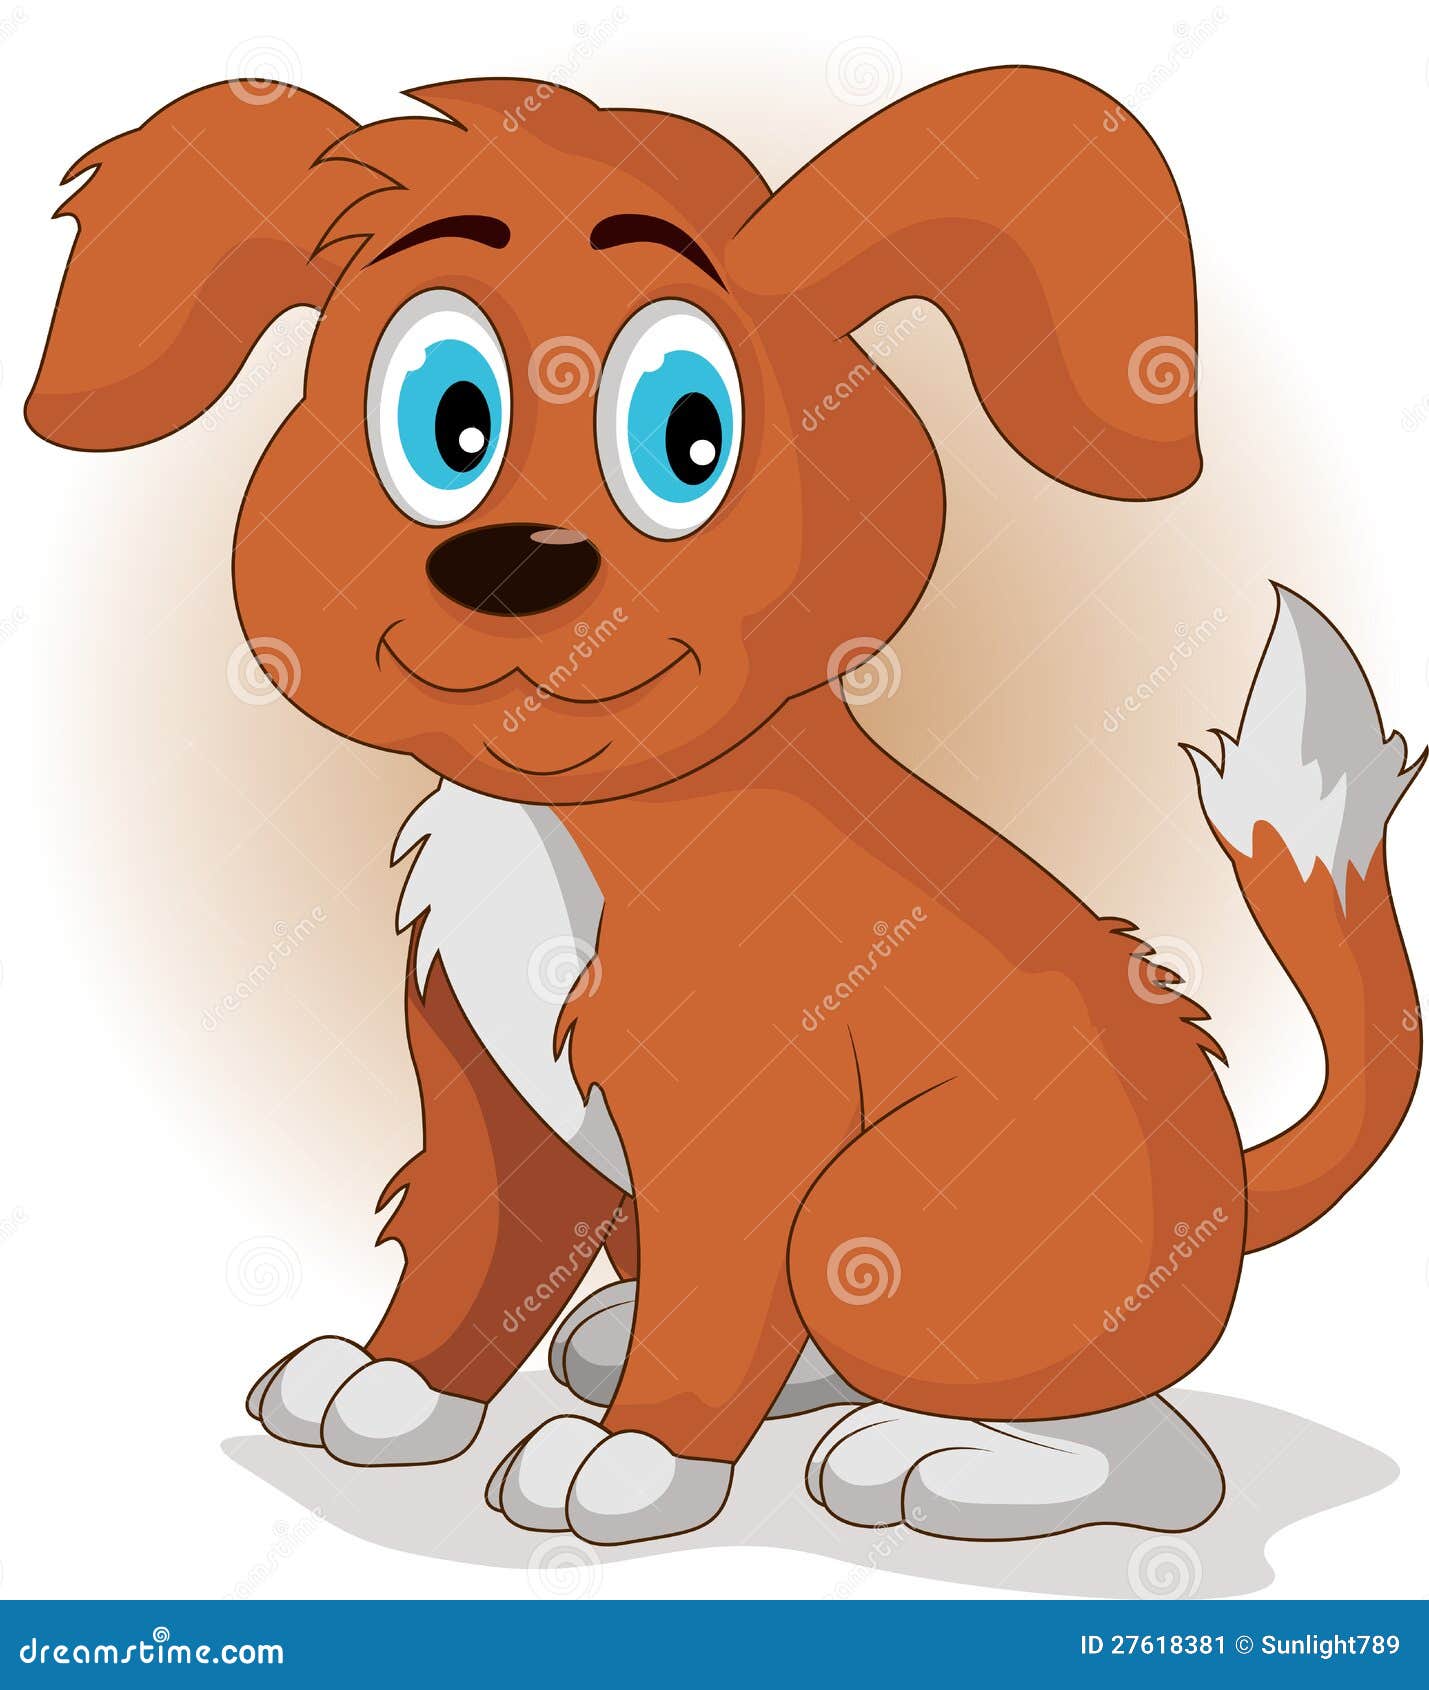 Cute cartoon puppy dog stock illustration. Illustration of hound - 27618381